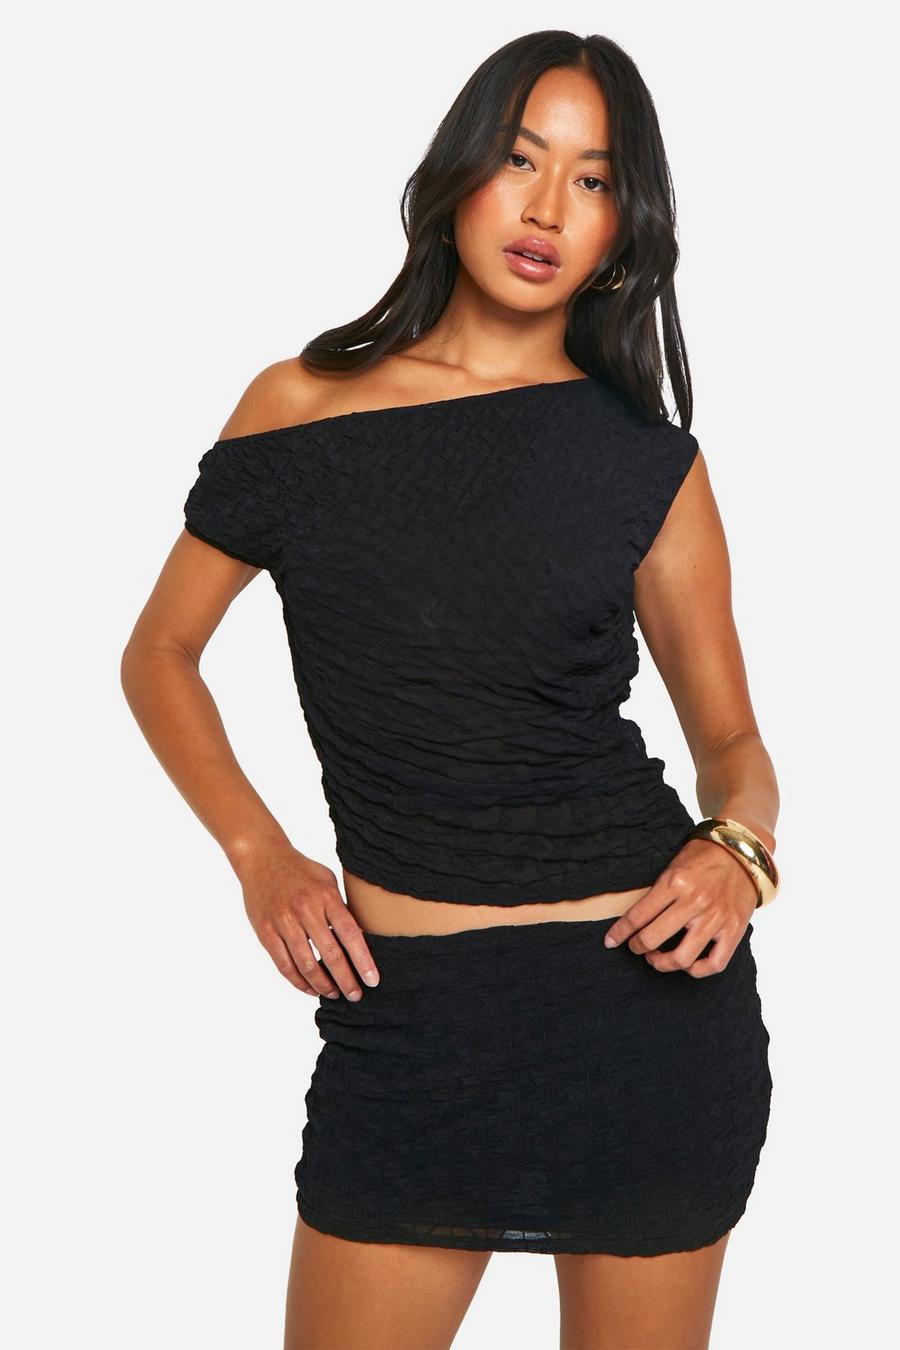 Black Sheer Textured Low Rise Mini Skirt